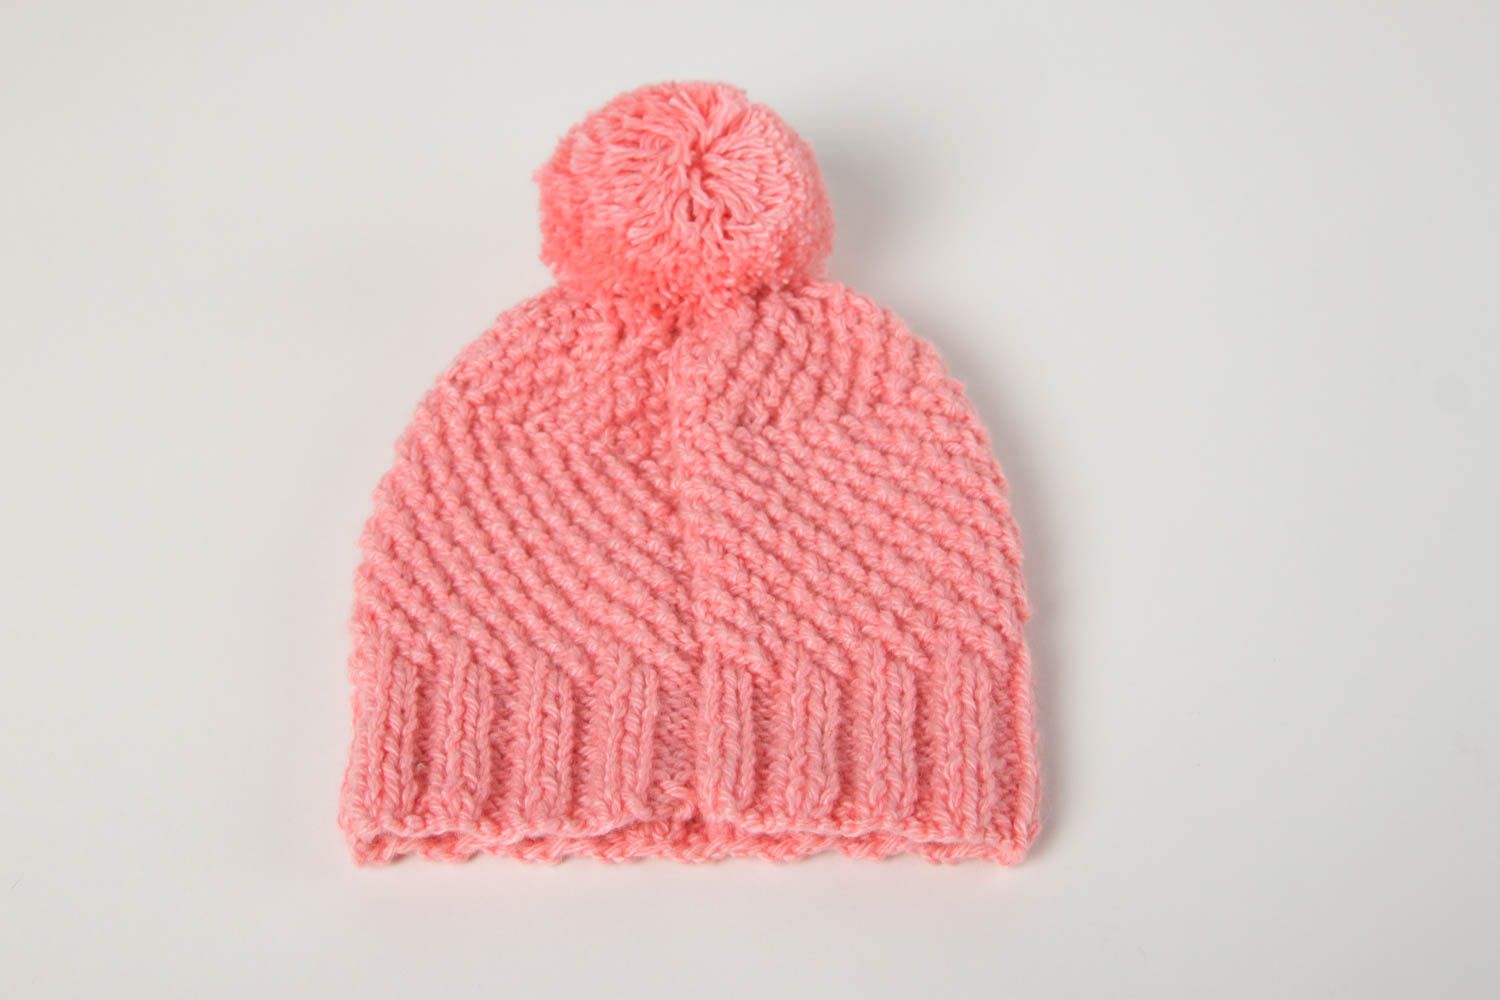 Handmade beautiful pink cap knitted designer cap stylish cute accessory photo 3